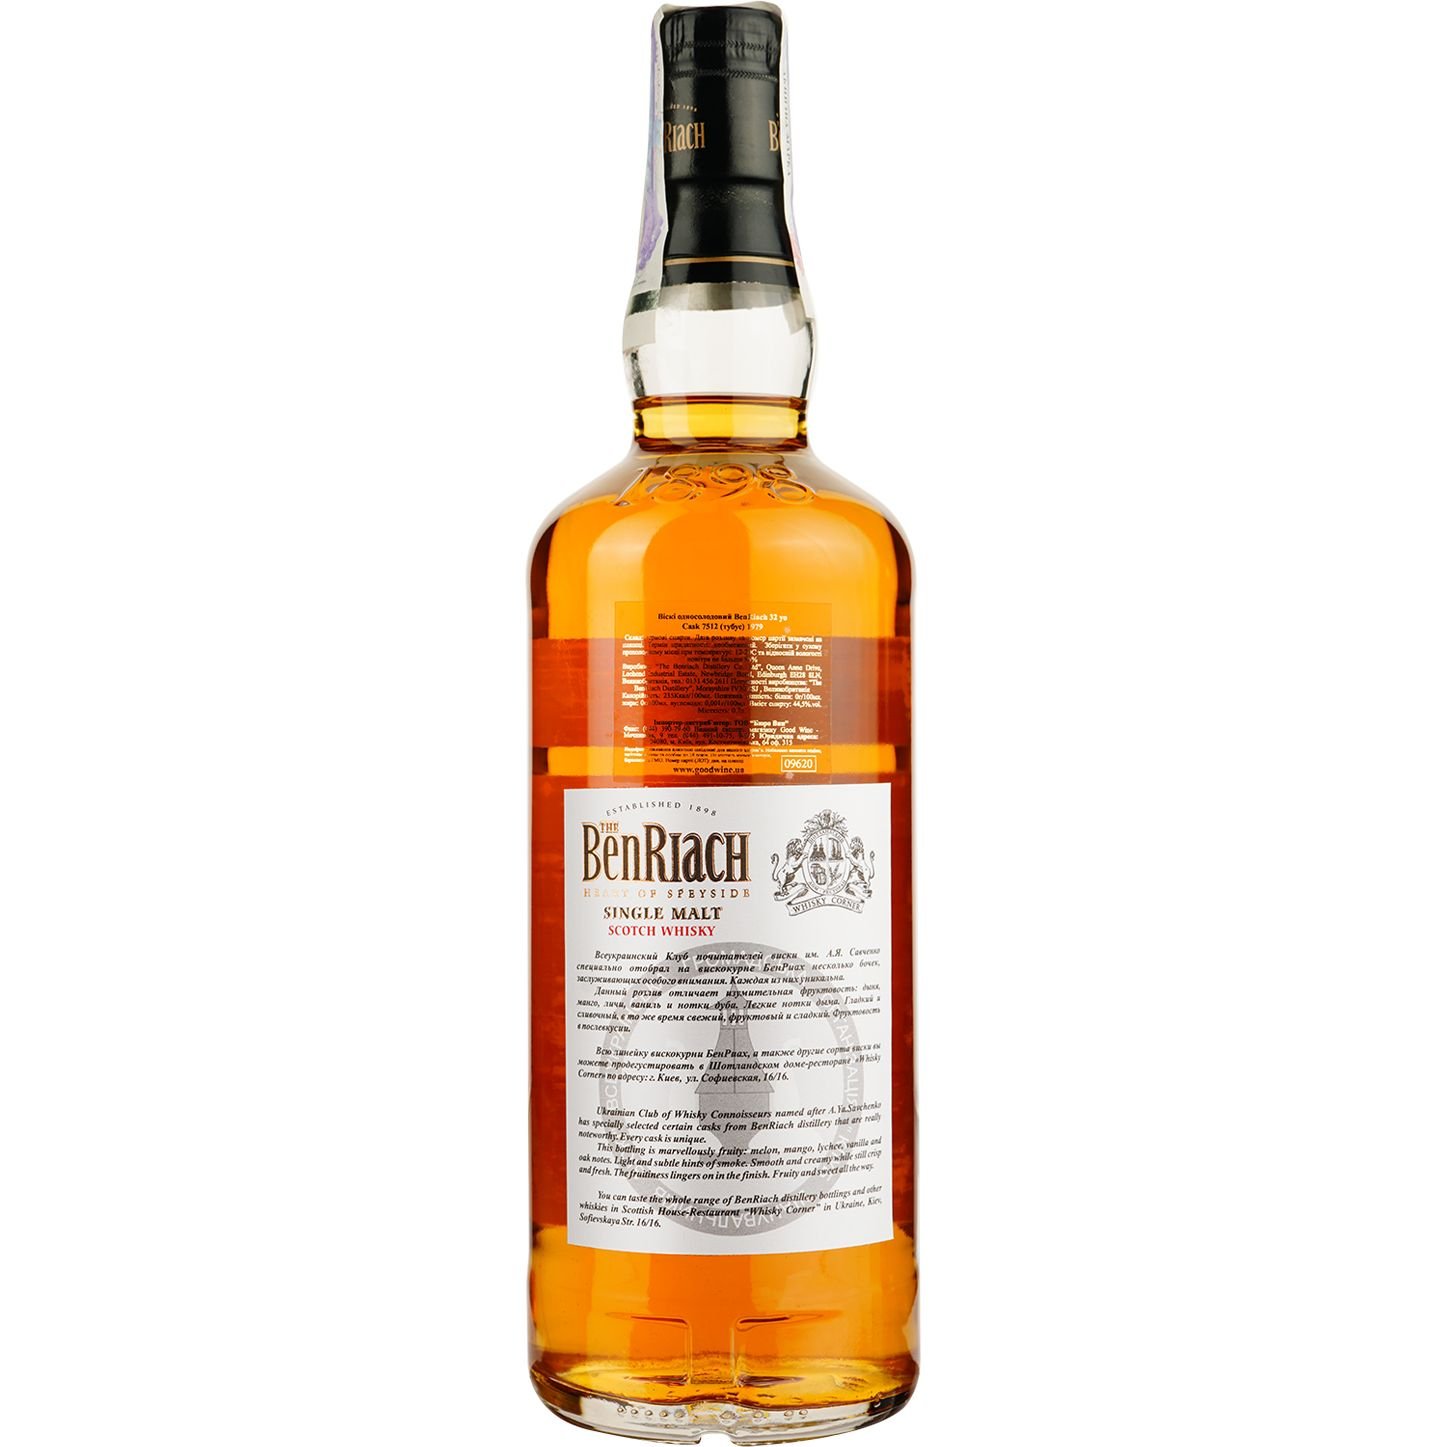 Віскі BenRiach 32 Years Old Refill Bourbon Barrel Cask 7512 Single Malt Scotch Whisky, у подарунковій упаковці, 44,5%, 0,7 л - фото 3